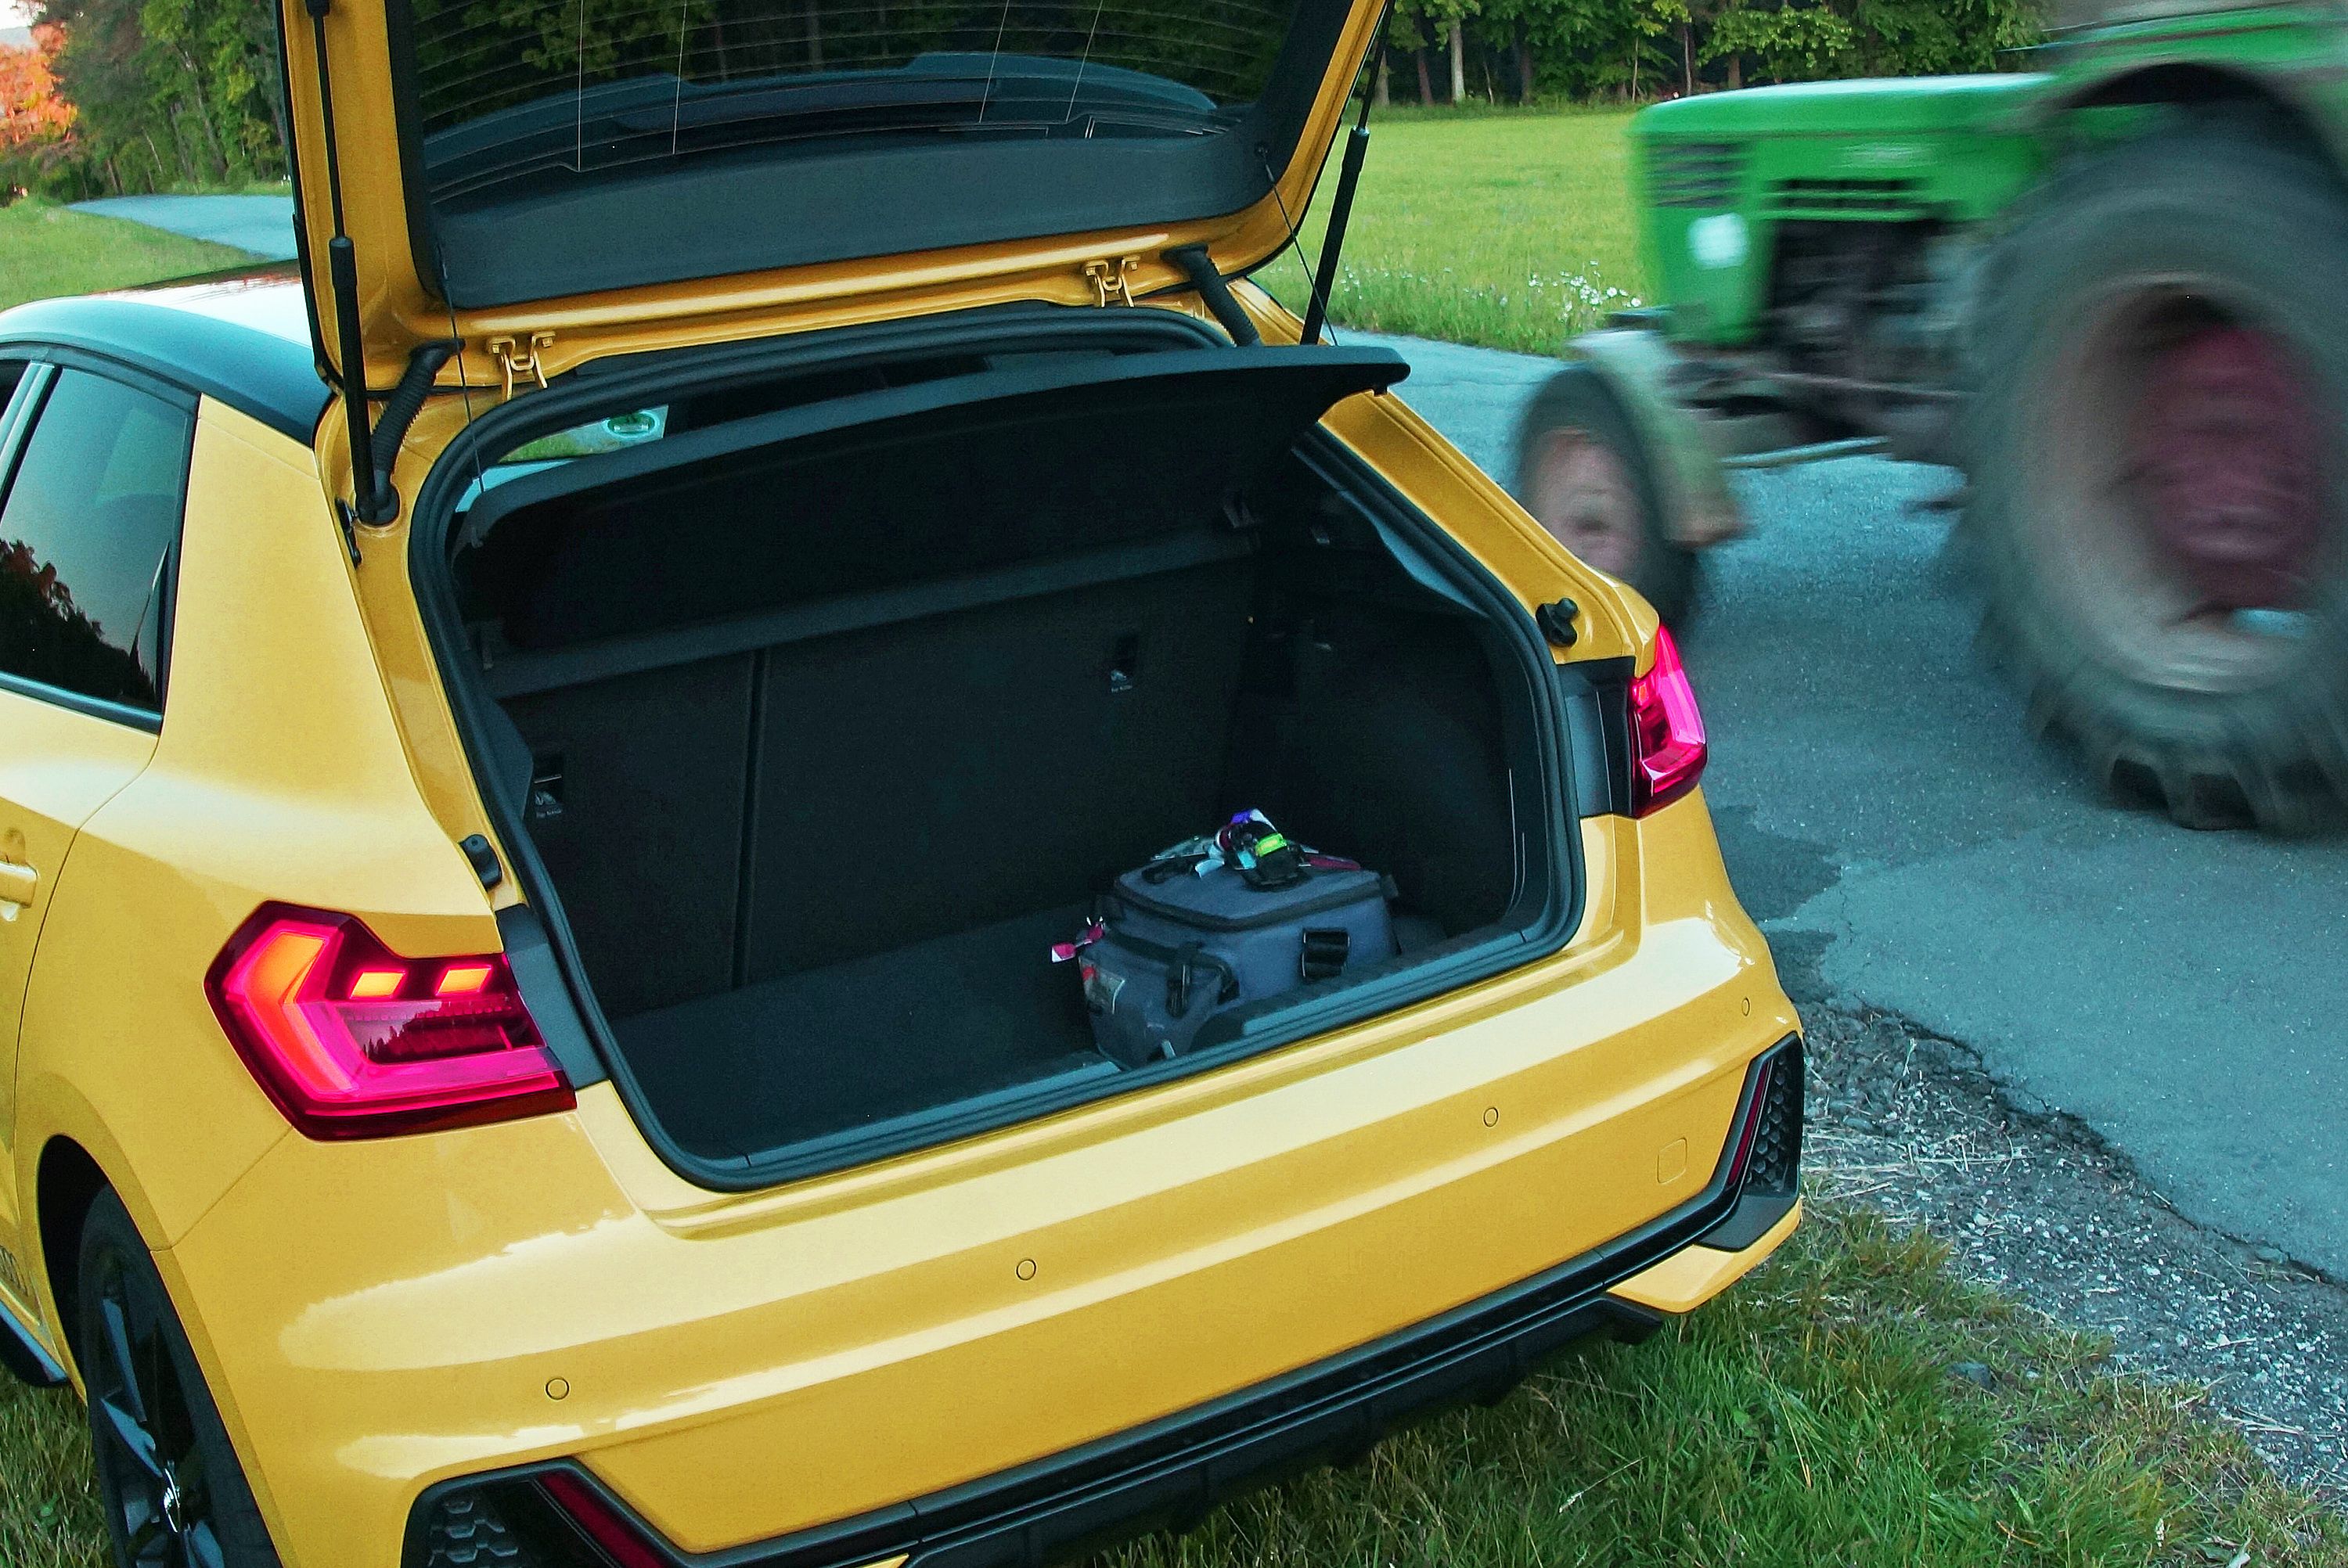 2019 Audi A1 Sportback Revealed, 40 TFSI Boasts 2.0-liter Engine With 200  PS - autoevolution